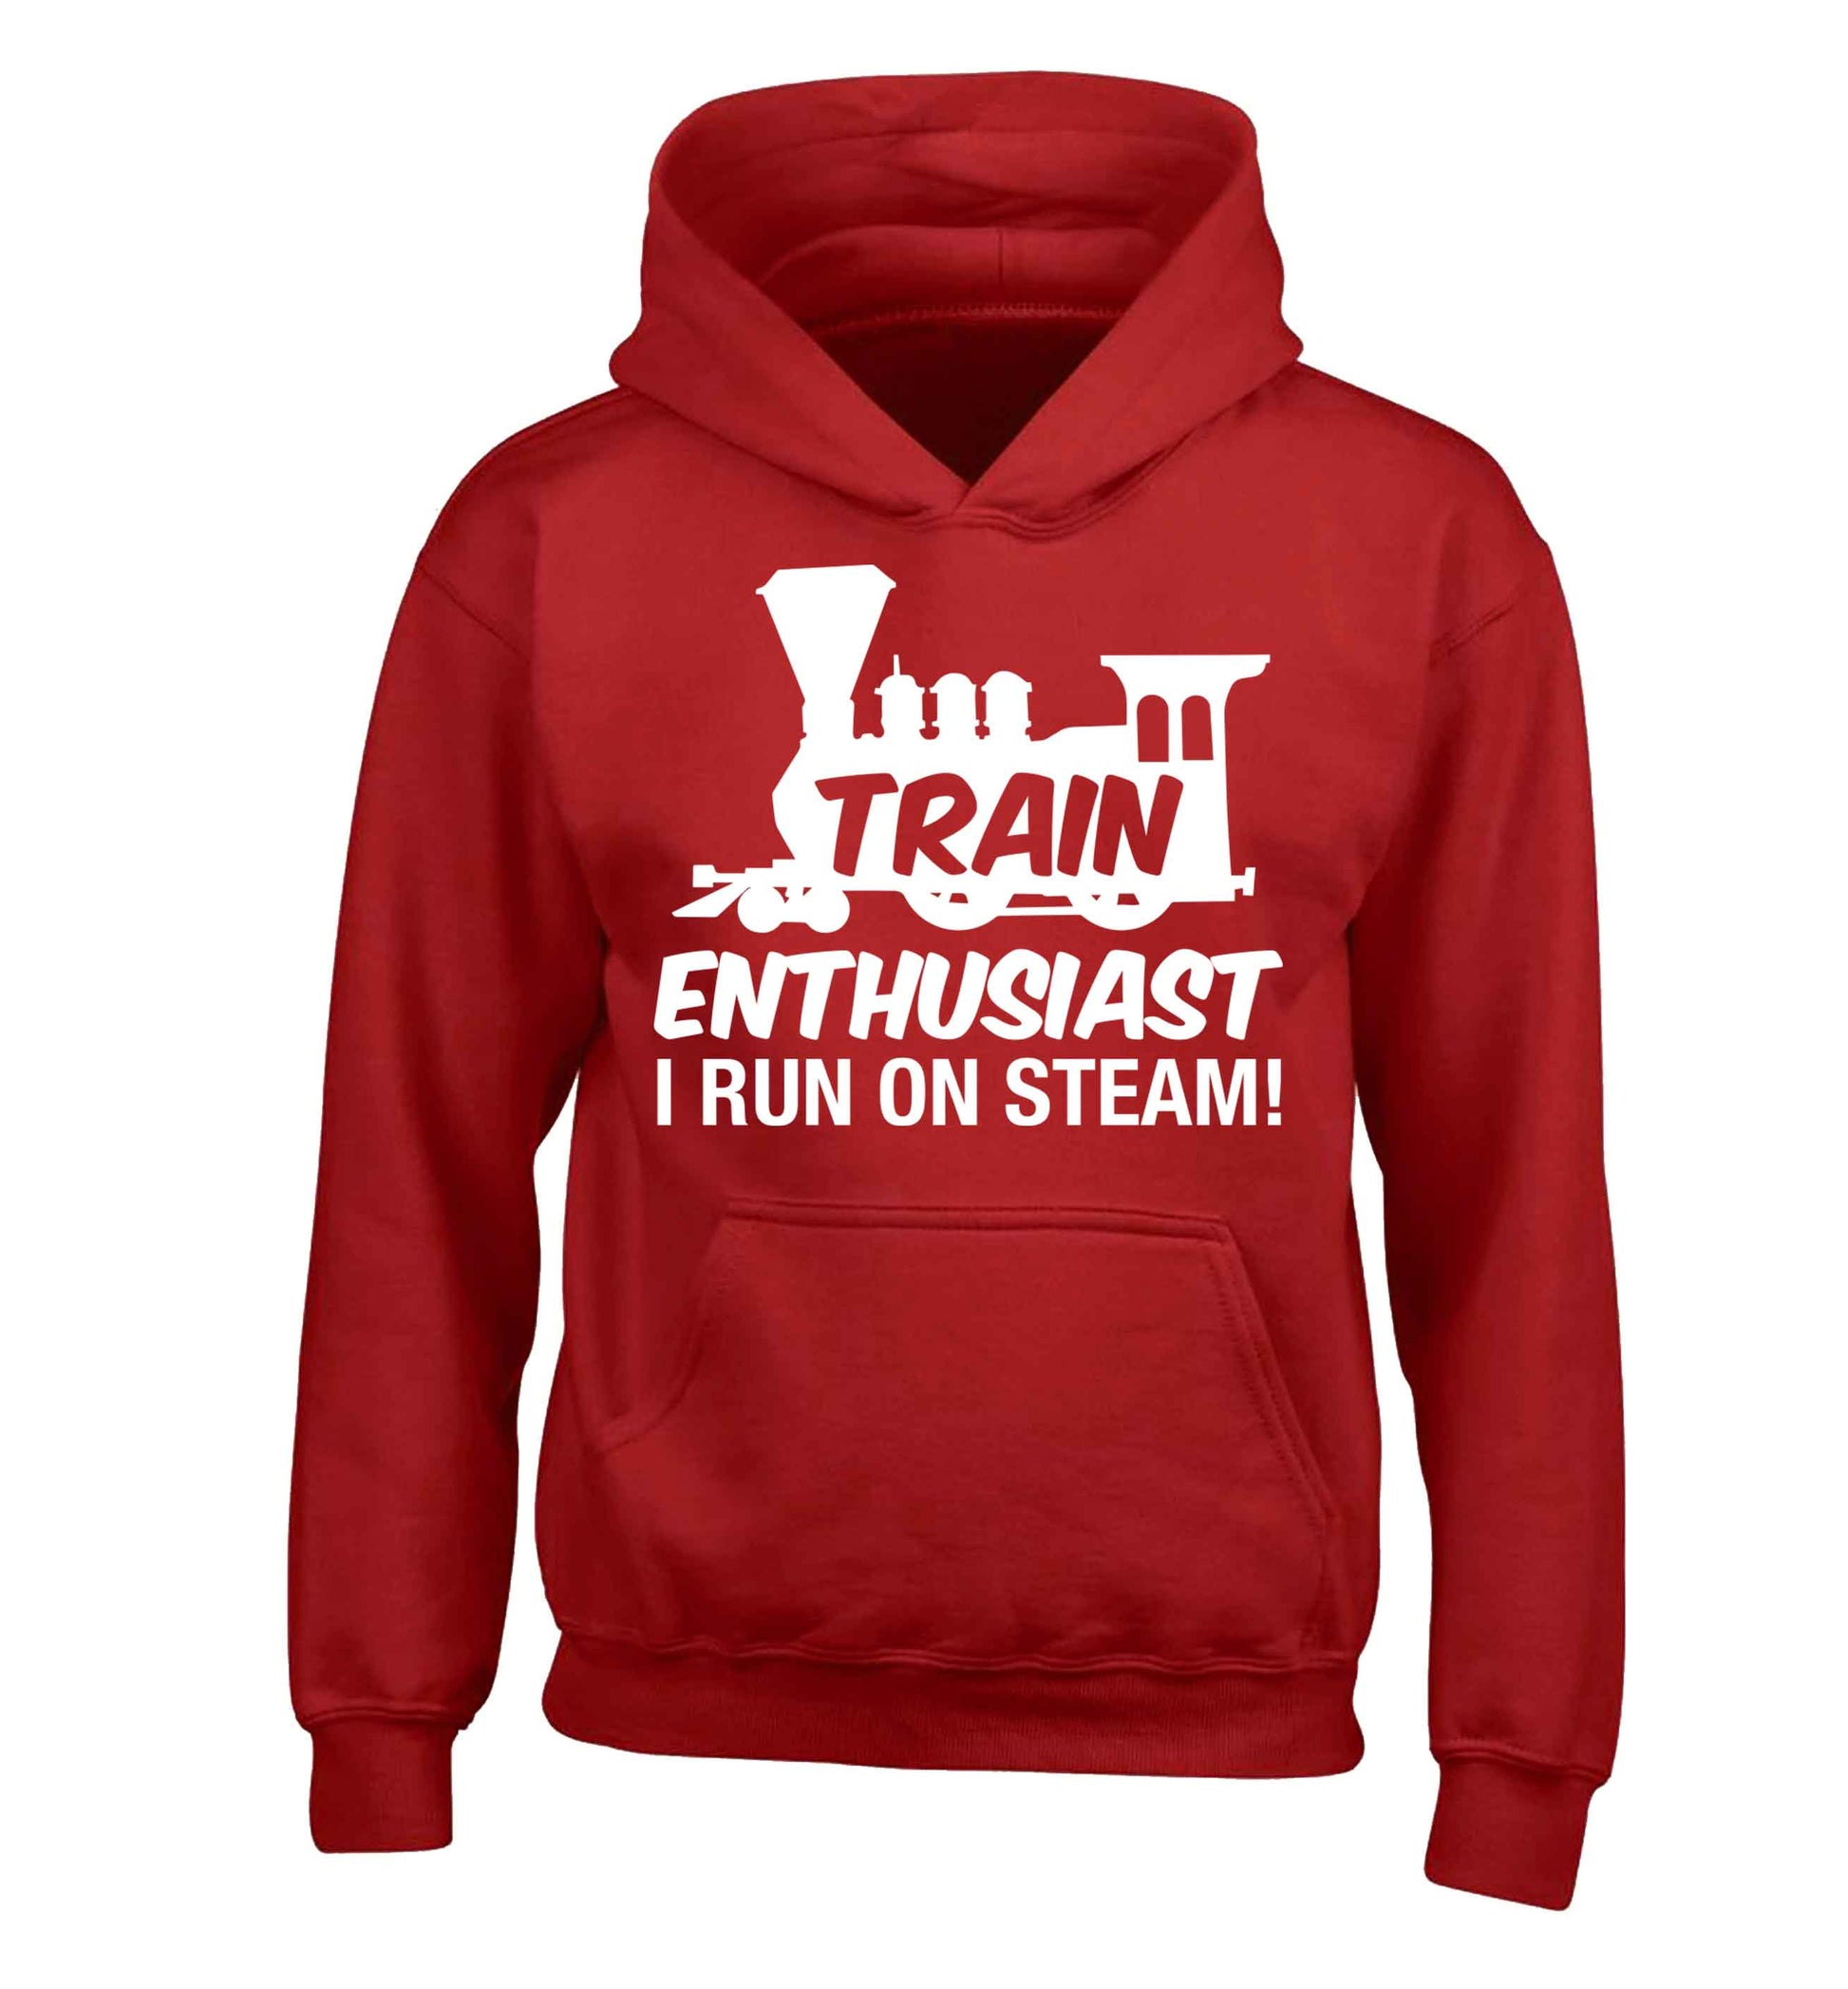 Train enthusiast I run on steam children's red hoodie 12-13 Years